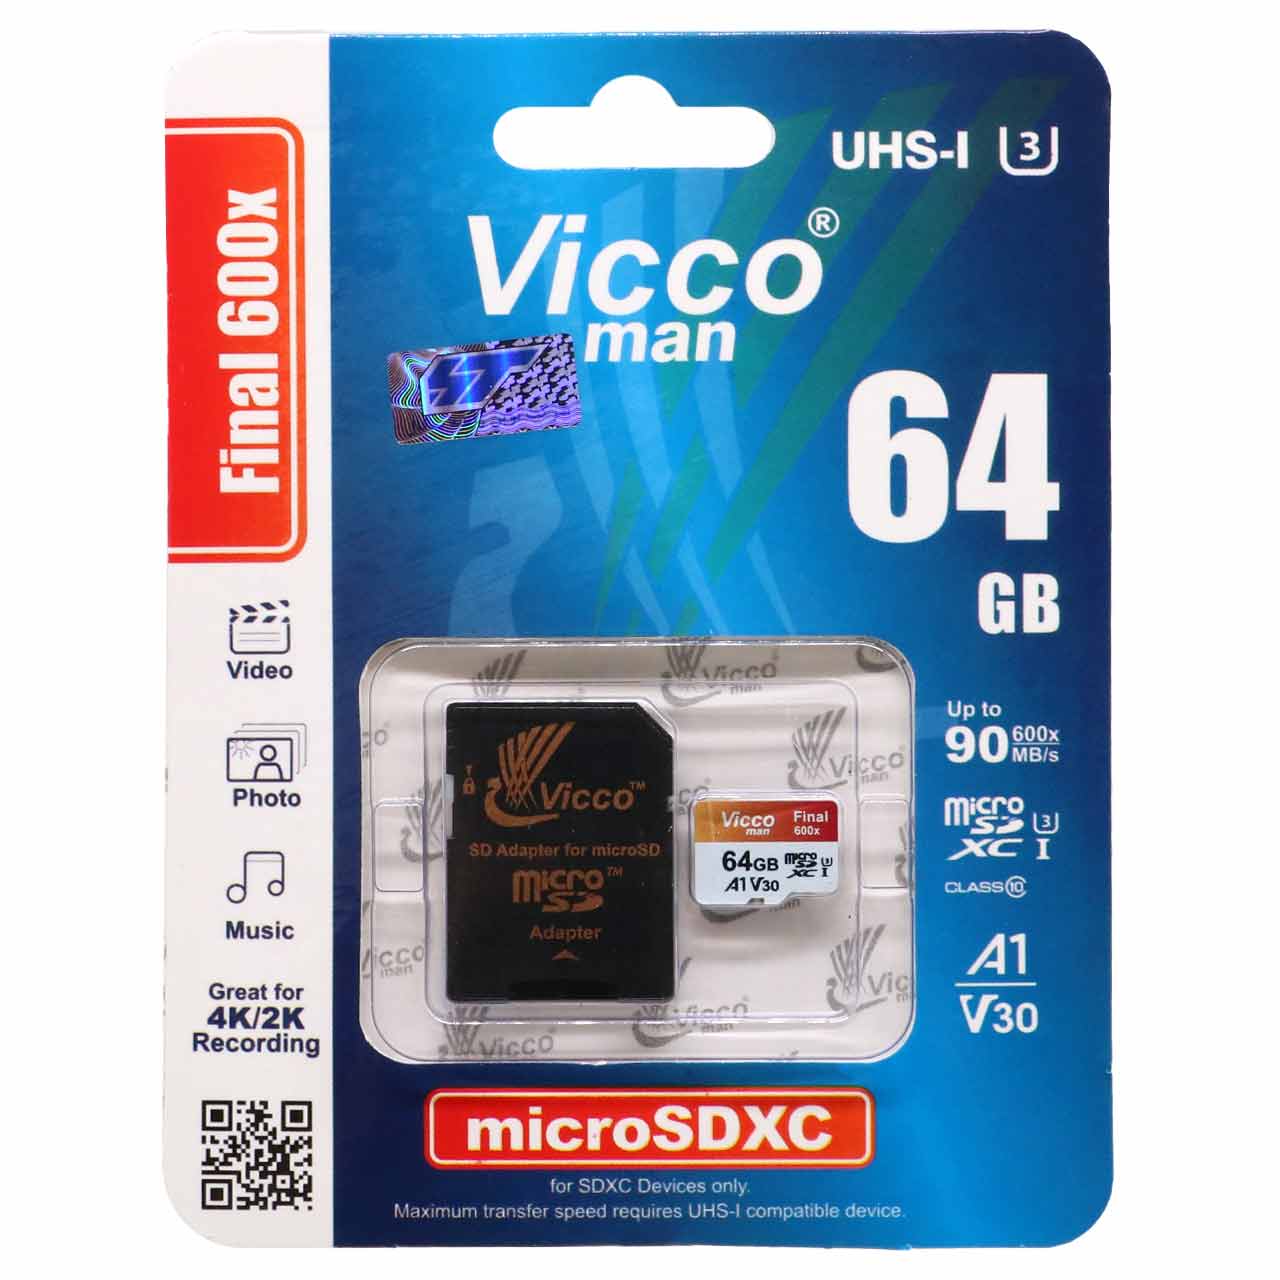 Vicco Micro SDXC - Final 600x - 64GB